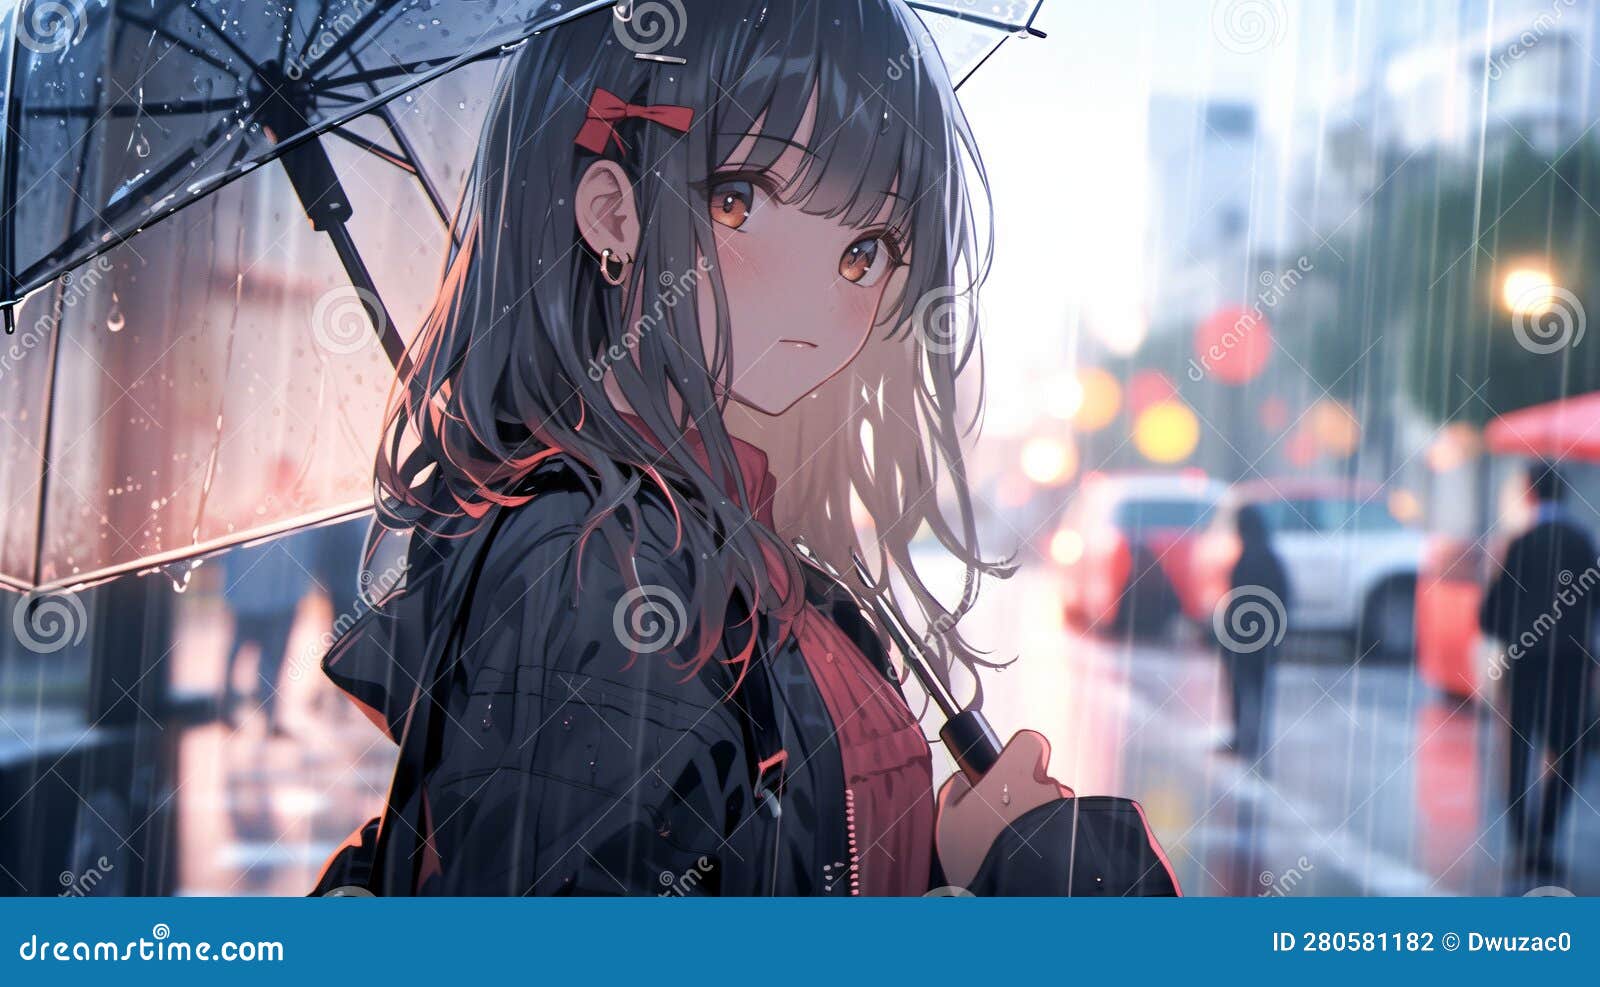 Aesthetic Rain Anime Desktop Wallpapers - Wallpaper Cave